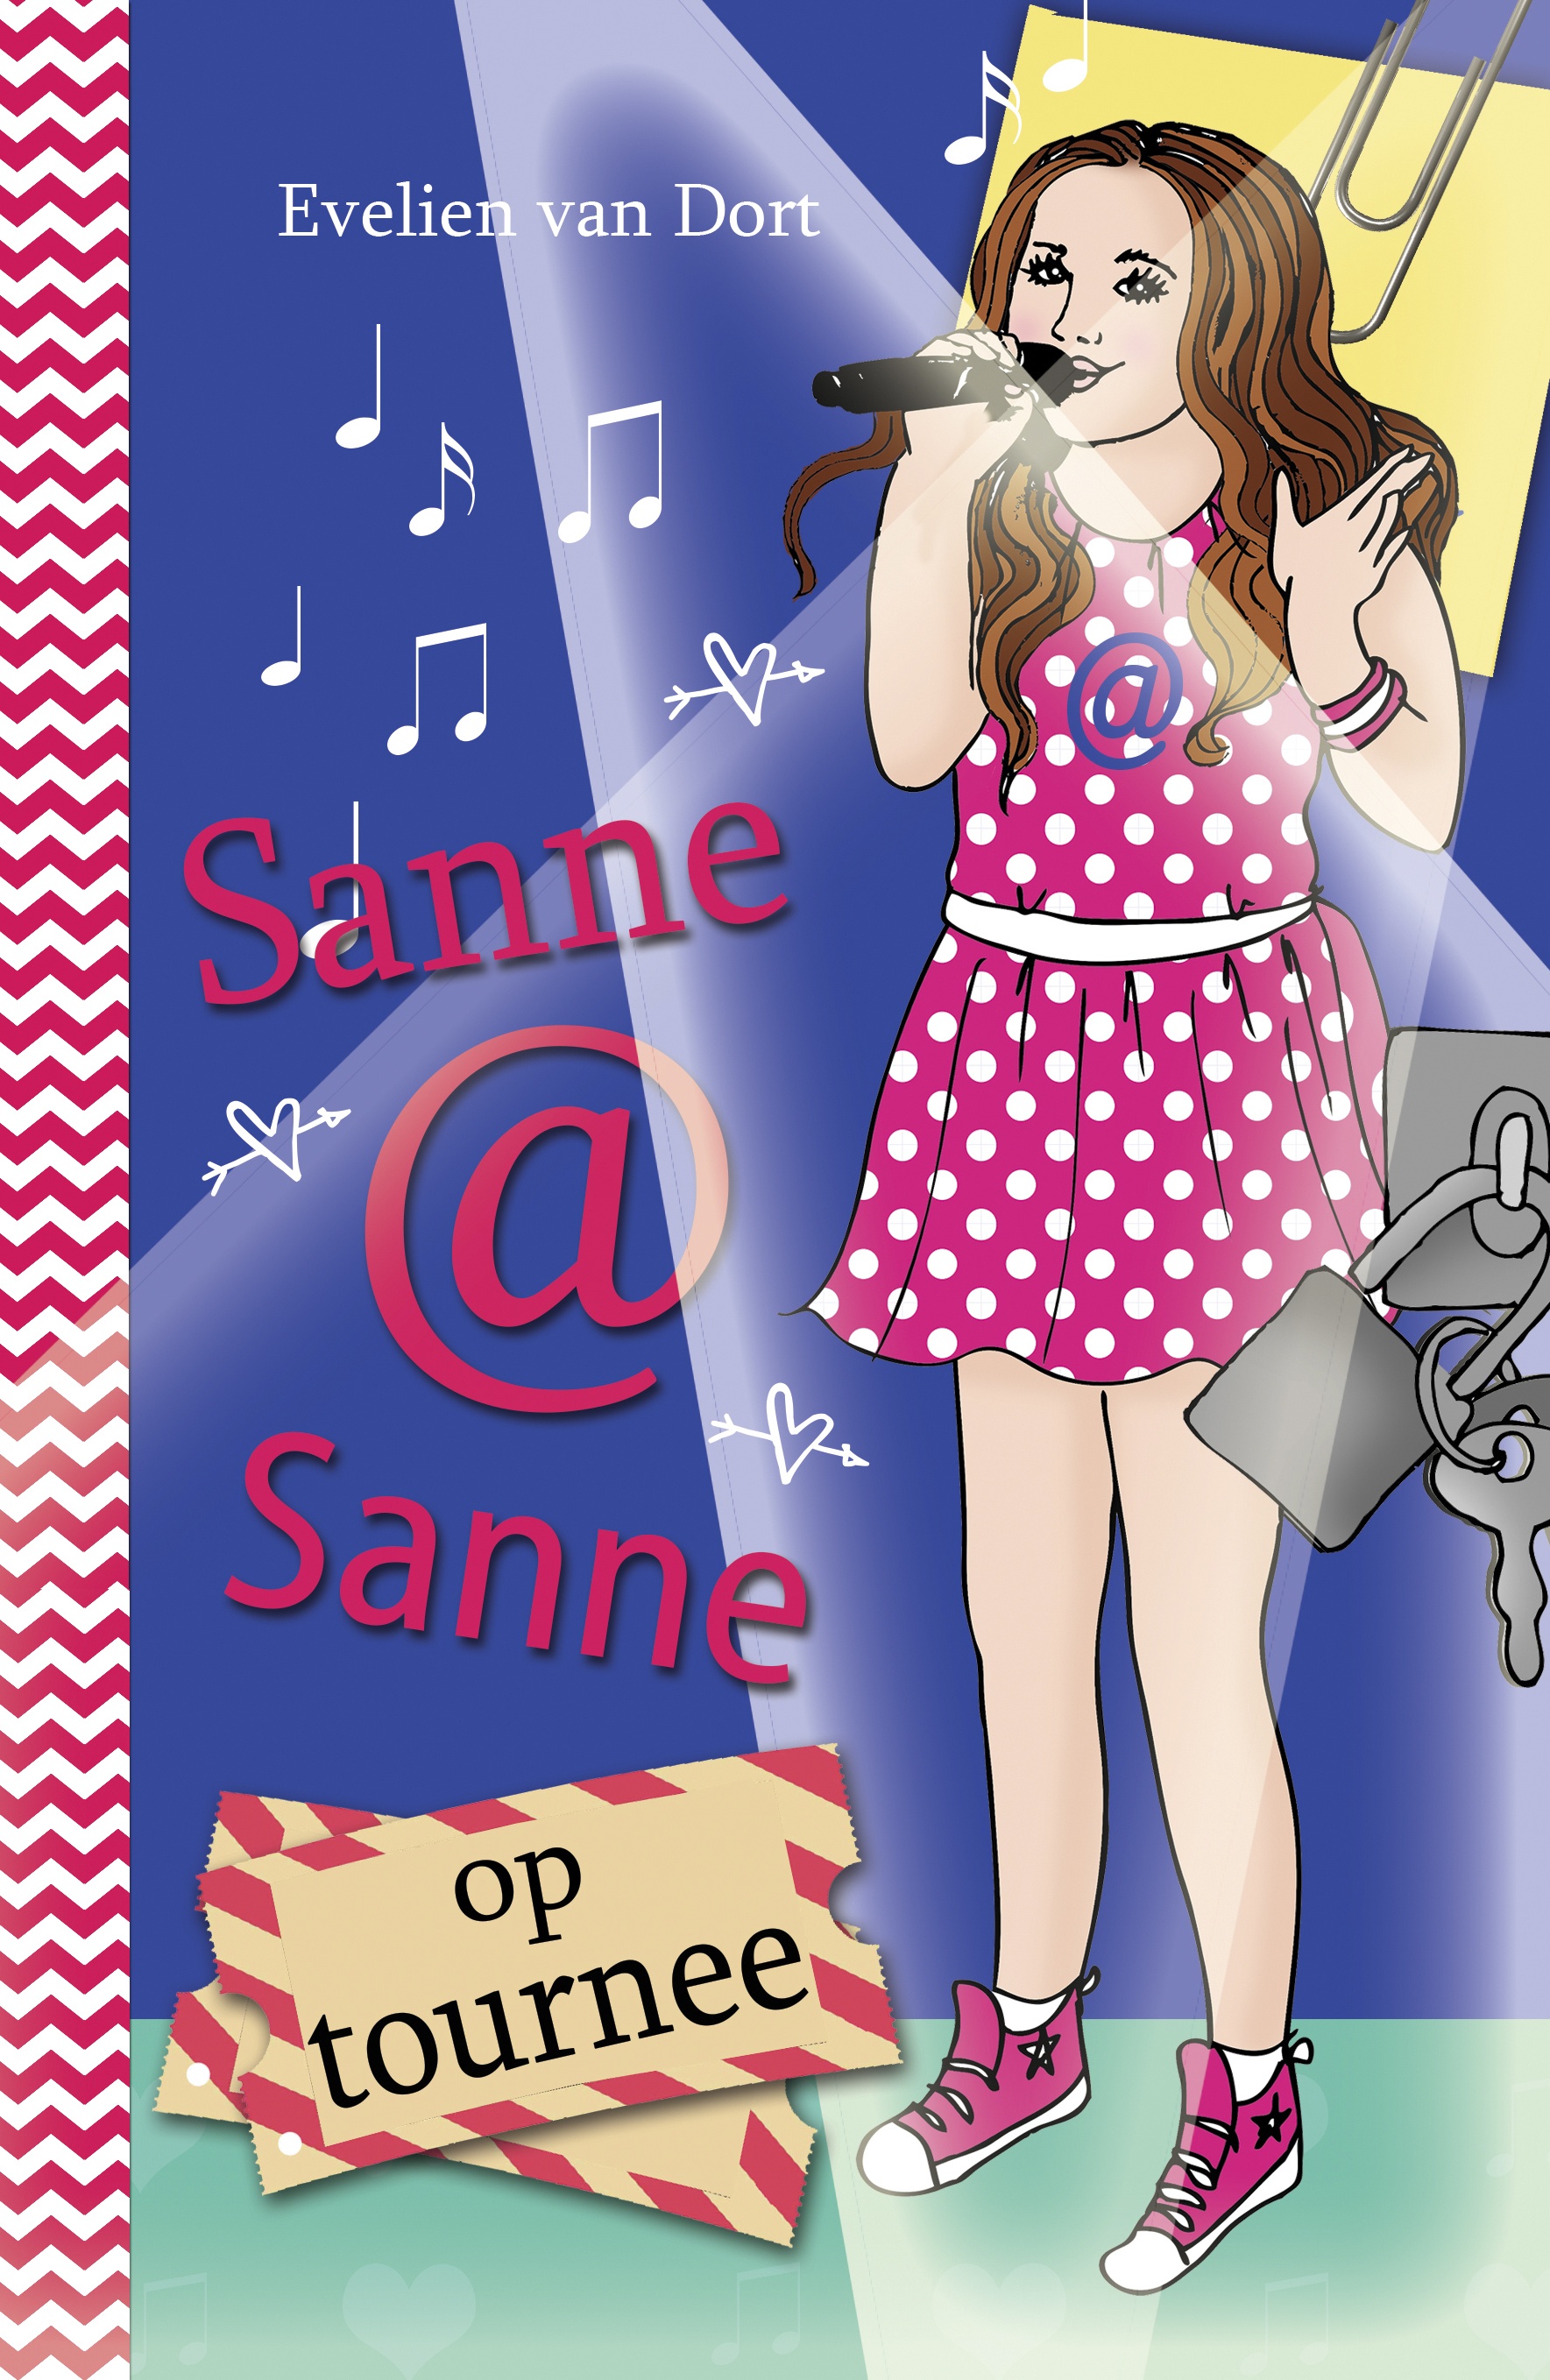 Je bekijkt nu Review: Sanne @ Sanne op tournee